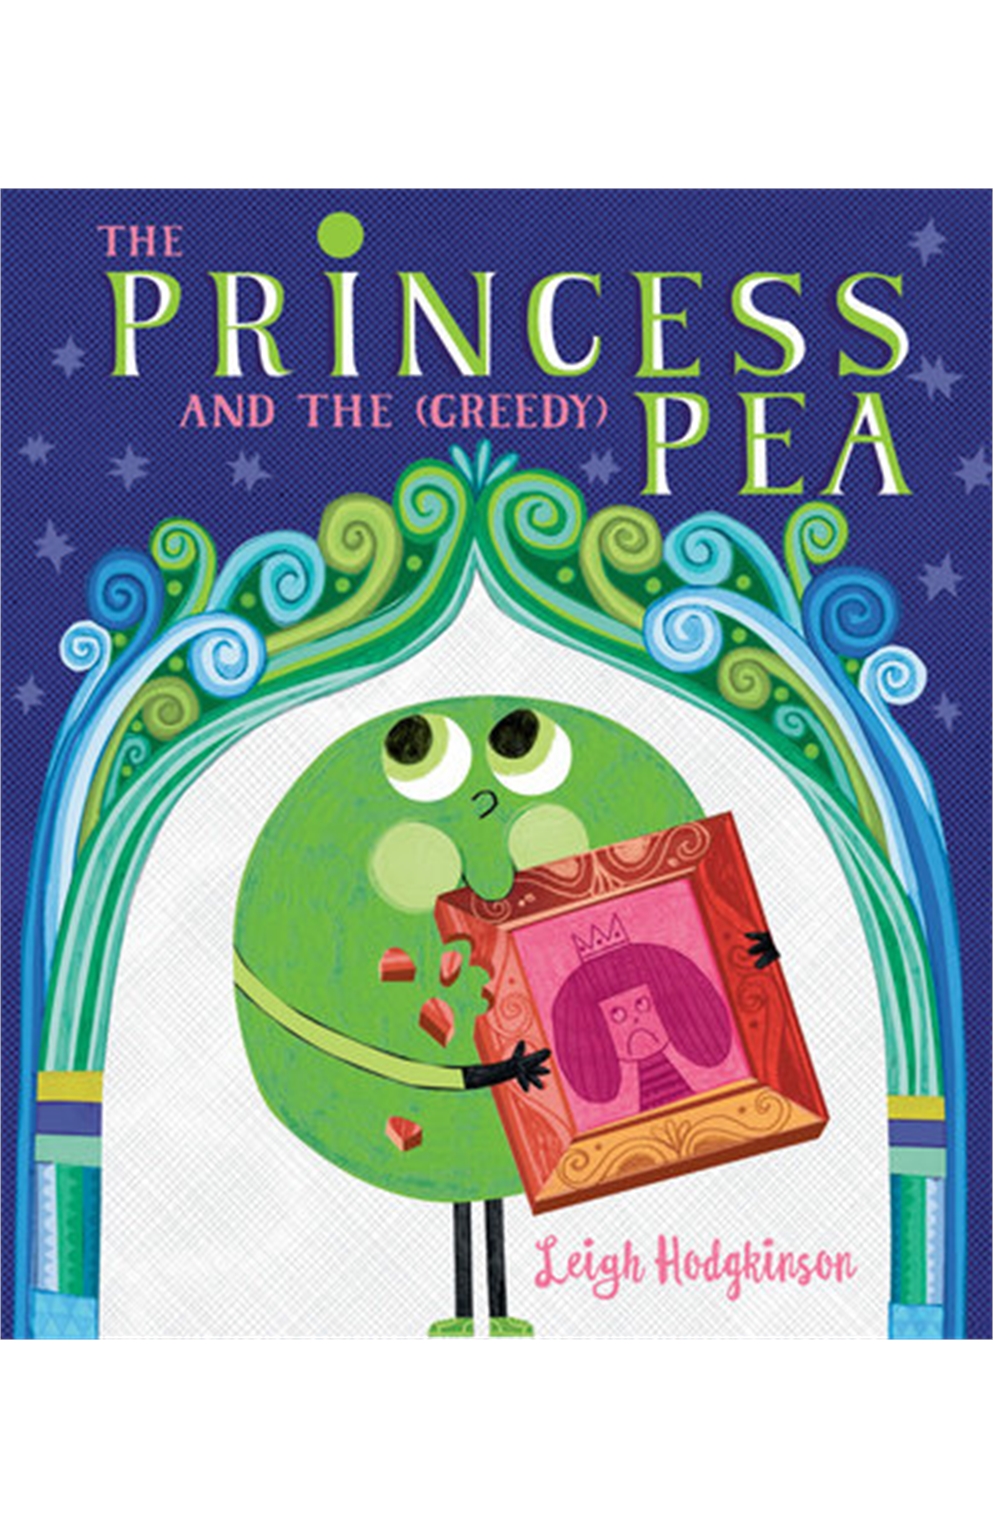 The Princess And The (Greedy) Pea